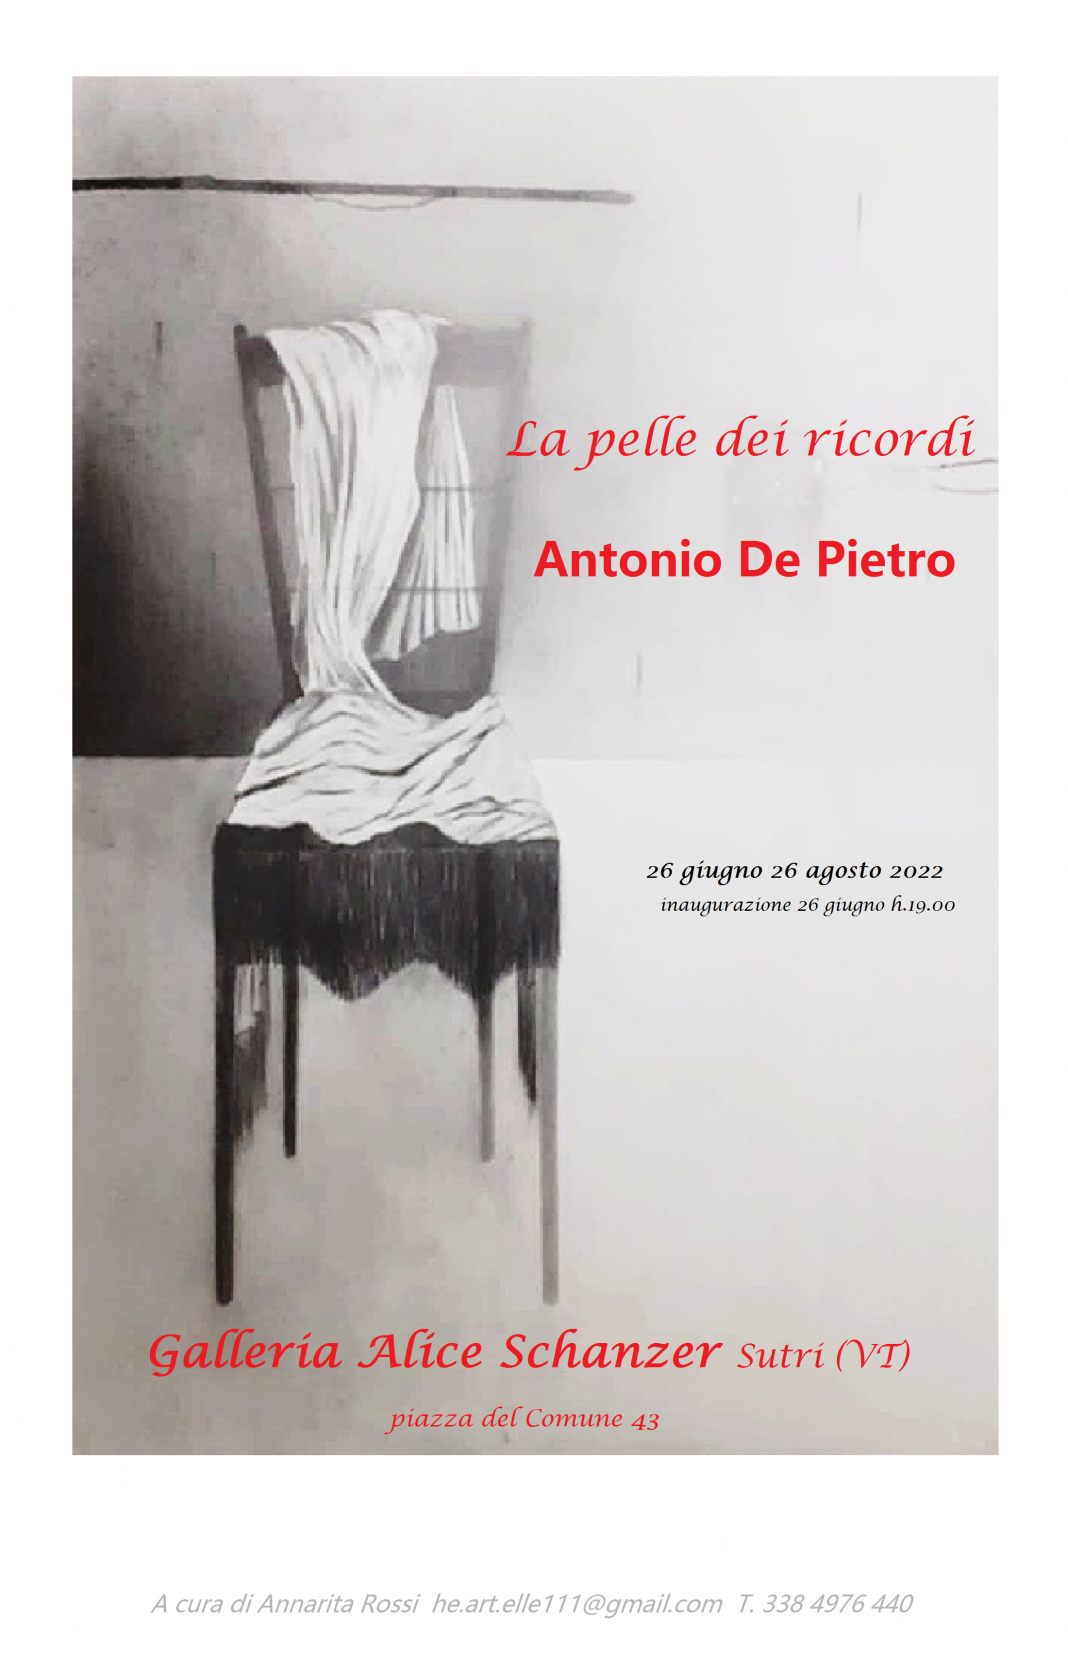 La pelle dei ricordi – Antonio De Pietrohttps://www.exibart.com/repository/media/formidable/11/img/264/la-pelle-dei-ricordi-2-buona-1-1068x1678.png